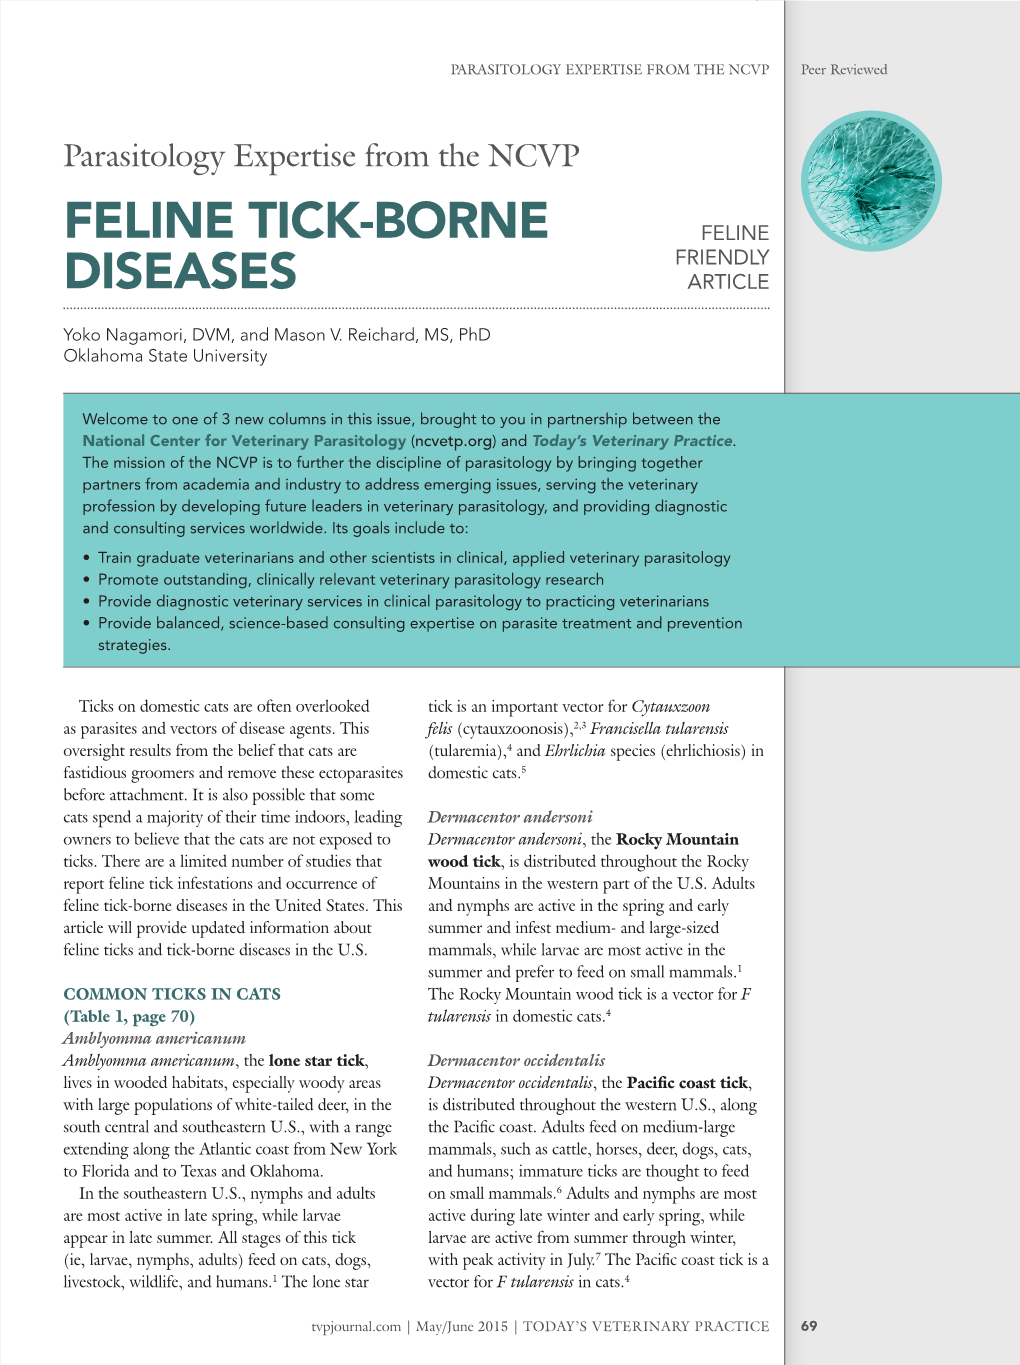 Feline Tick-Borne Diseases in the United States